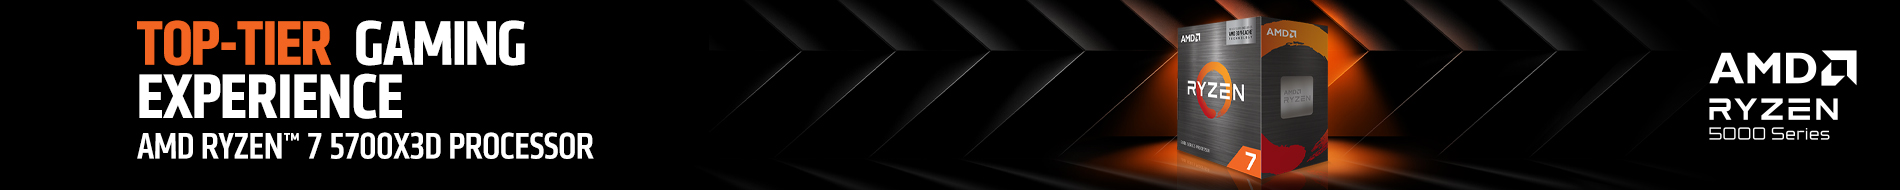 AMD Ryzen  Banners 01.31.banner55